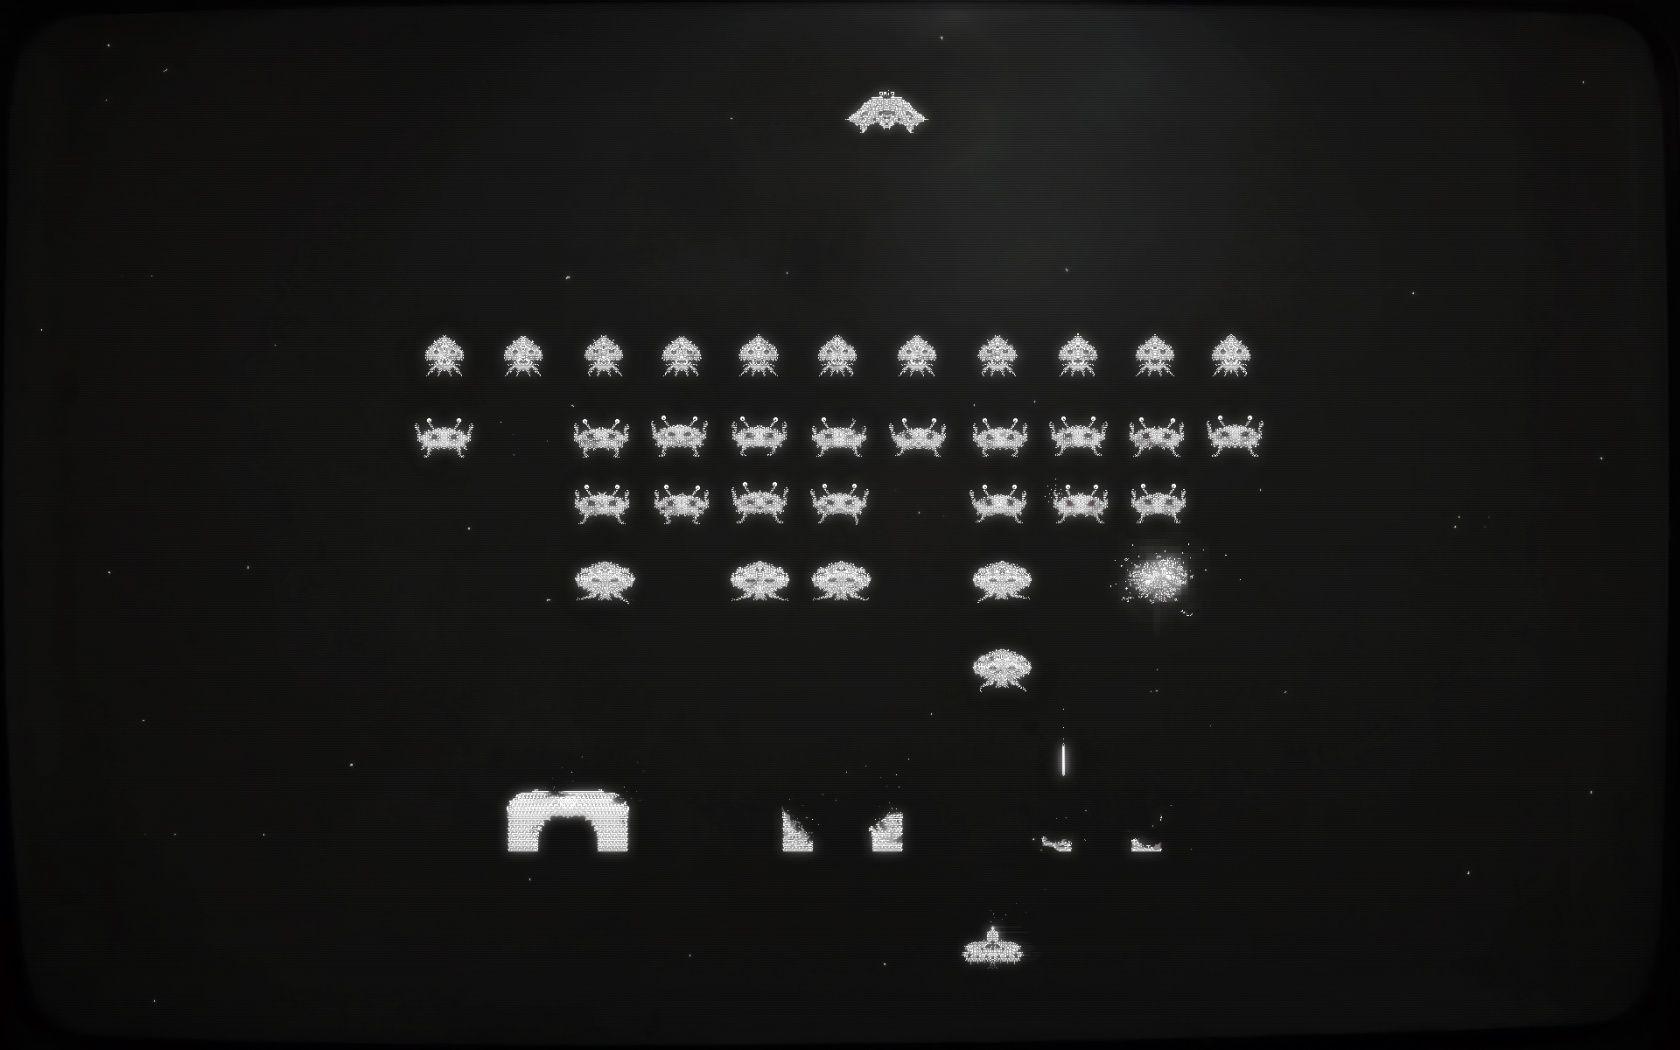 Retro: Space Invaders desktop PC and Mac wallpaper